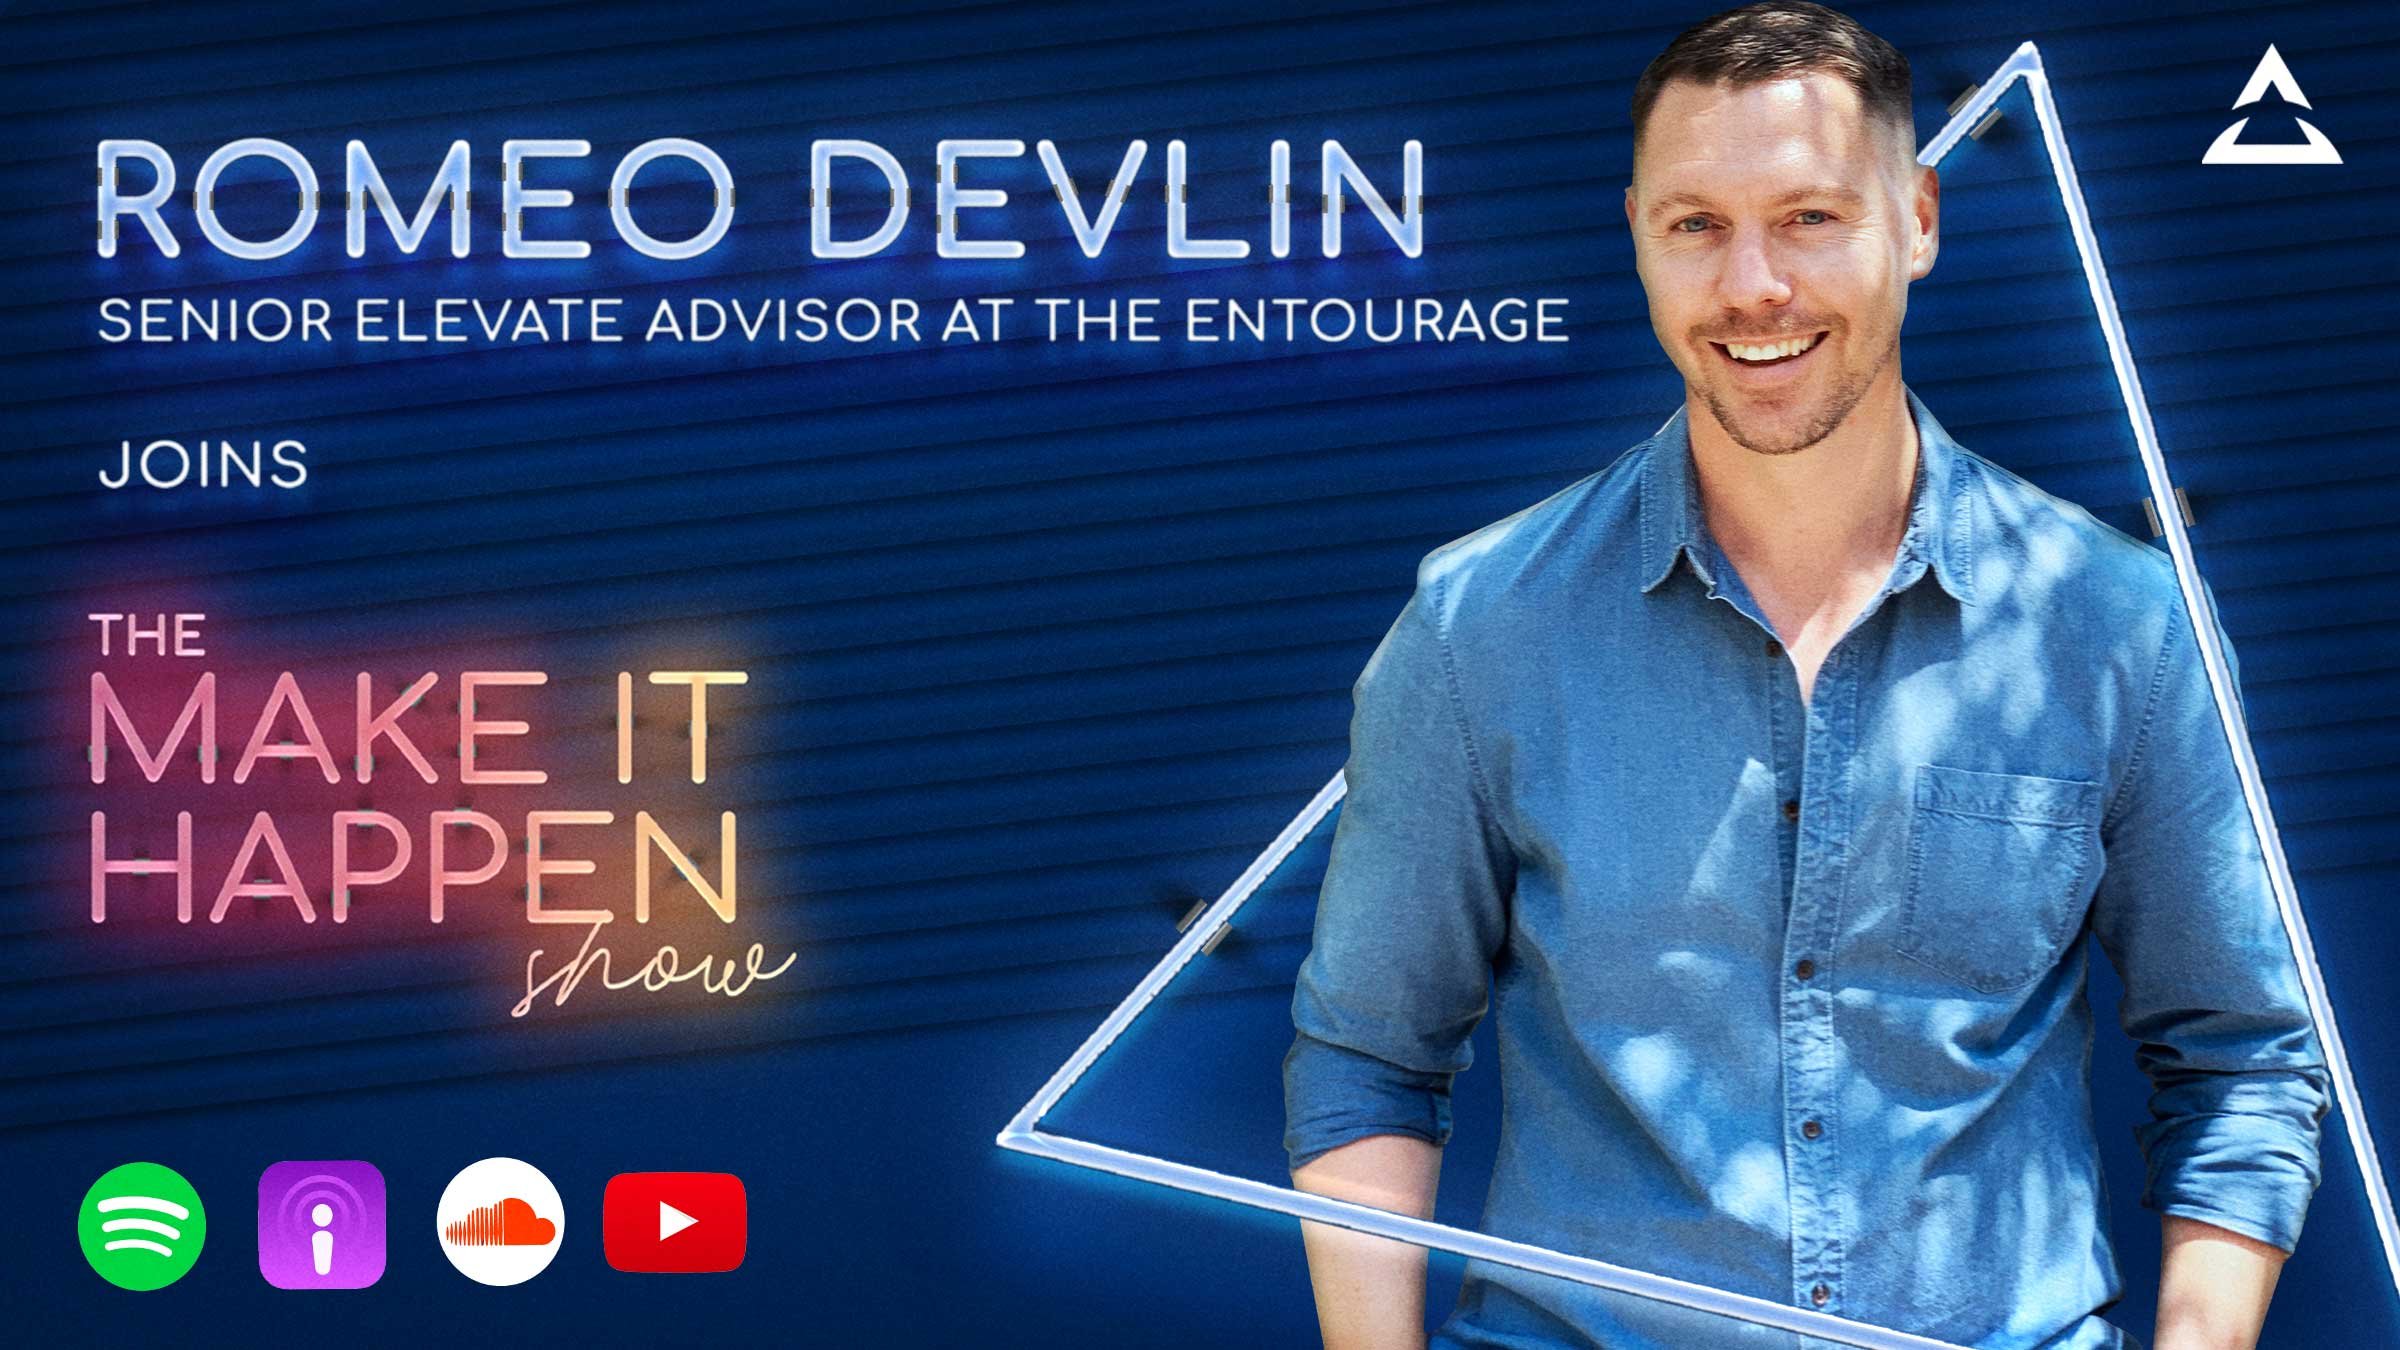 Romeo Devlin, Senior Elevate Advisor at The Entourage, joins The Make It Happen Show